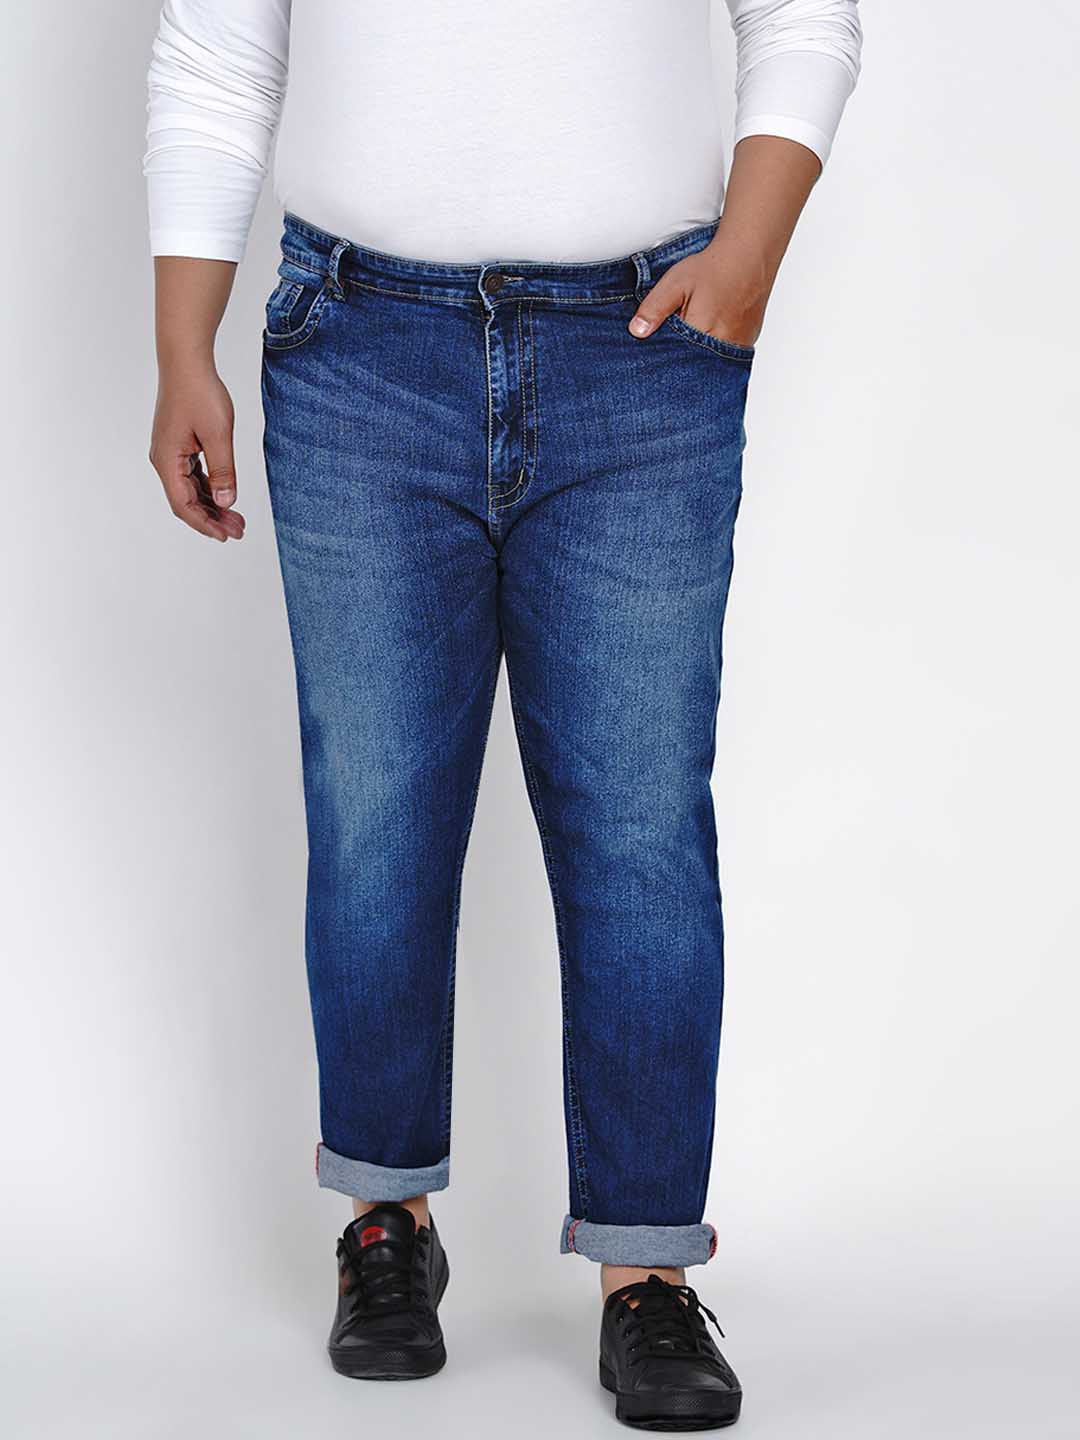 John Pride Blue Jeans